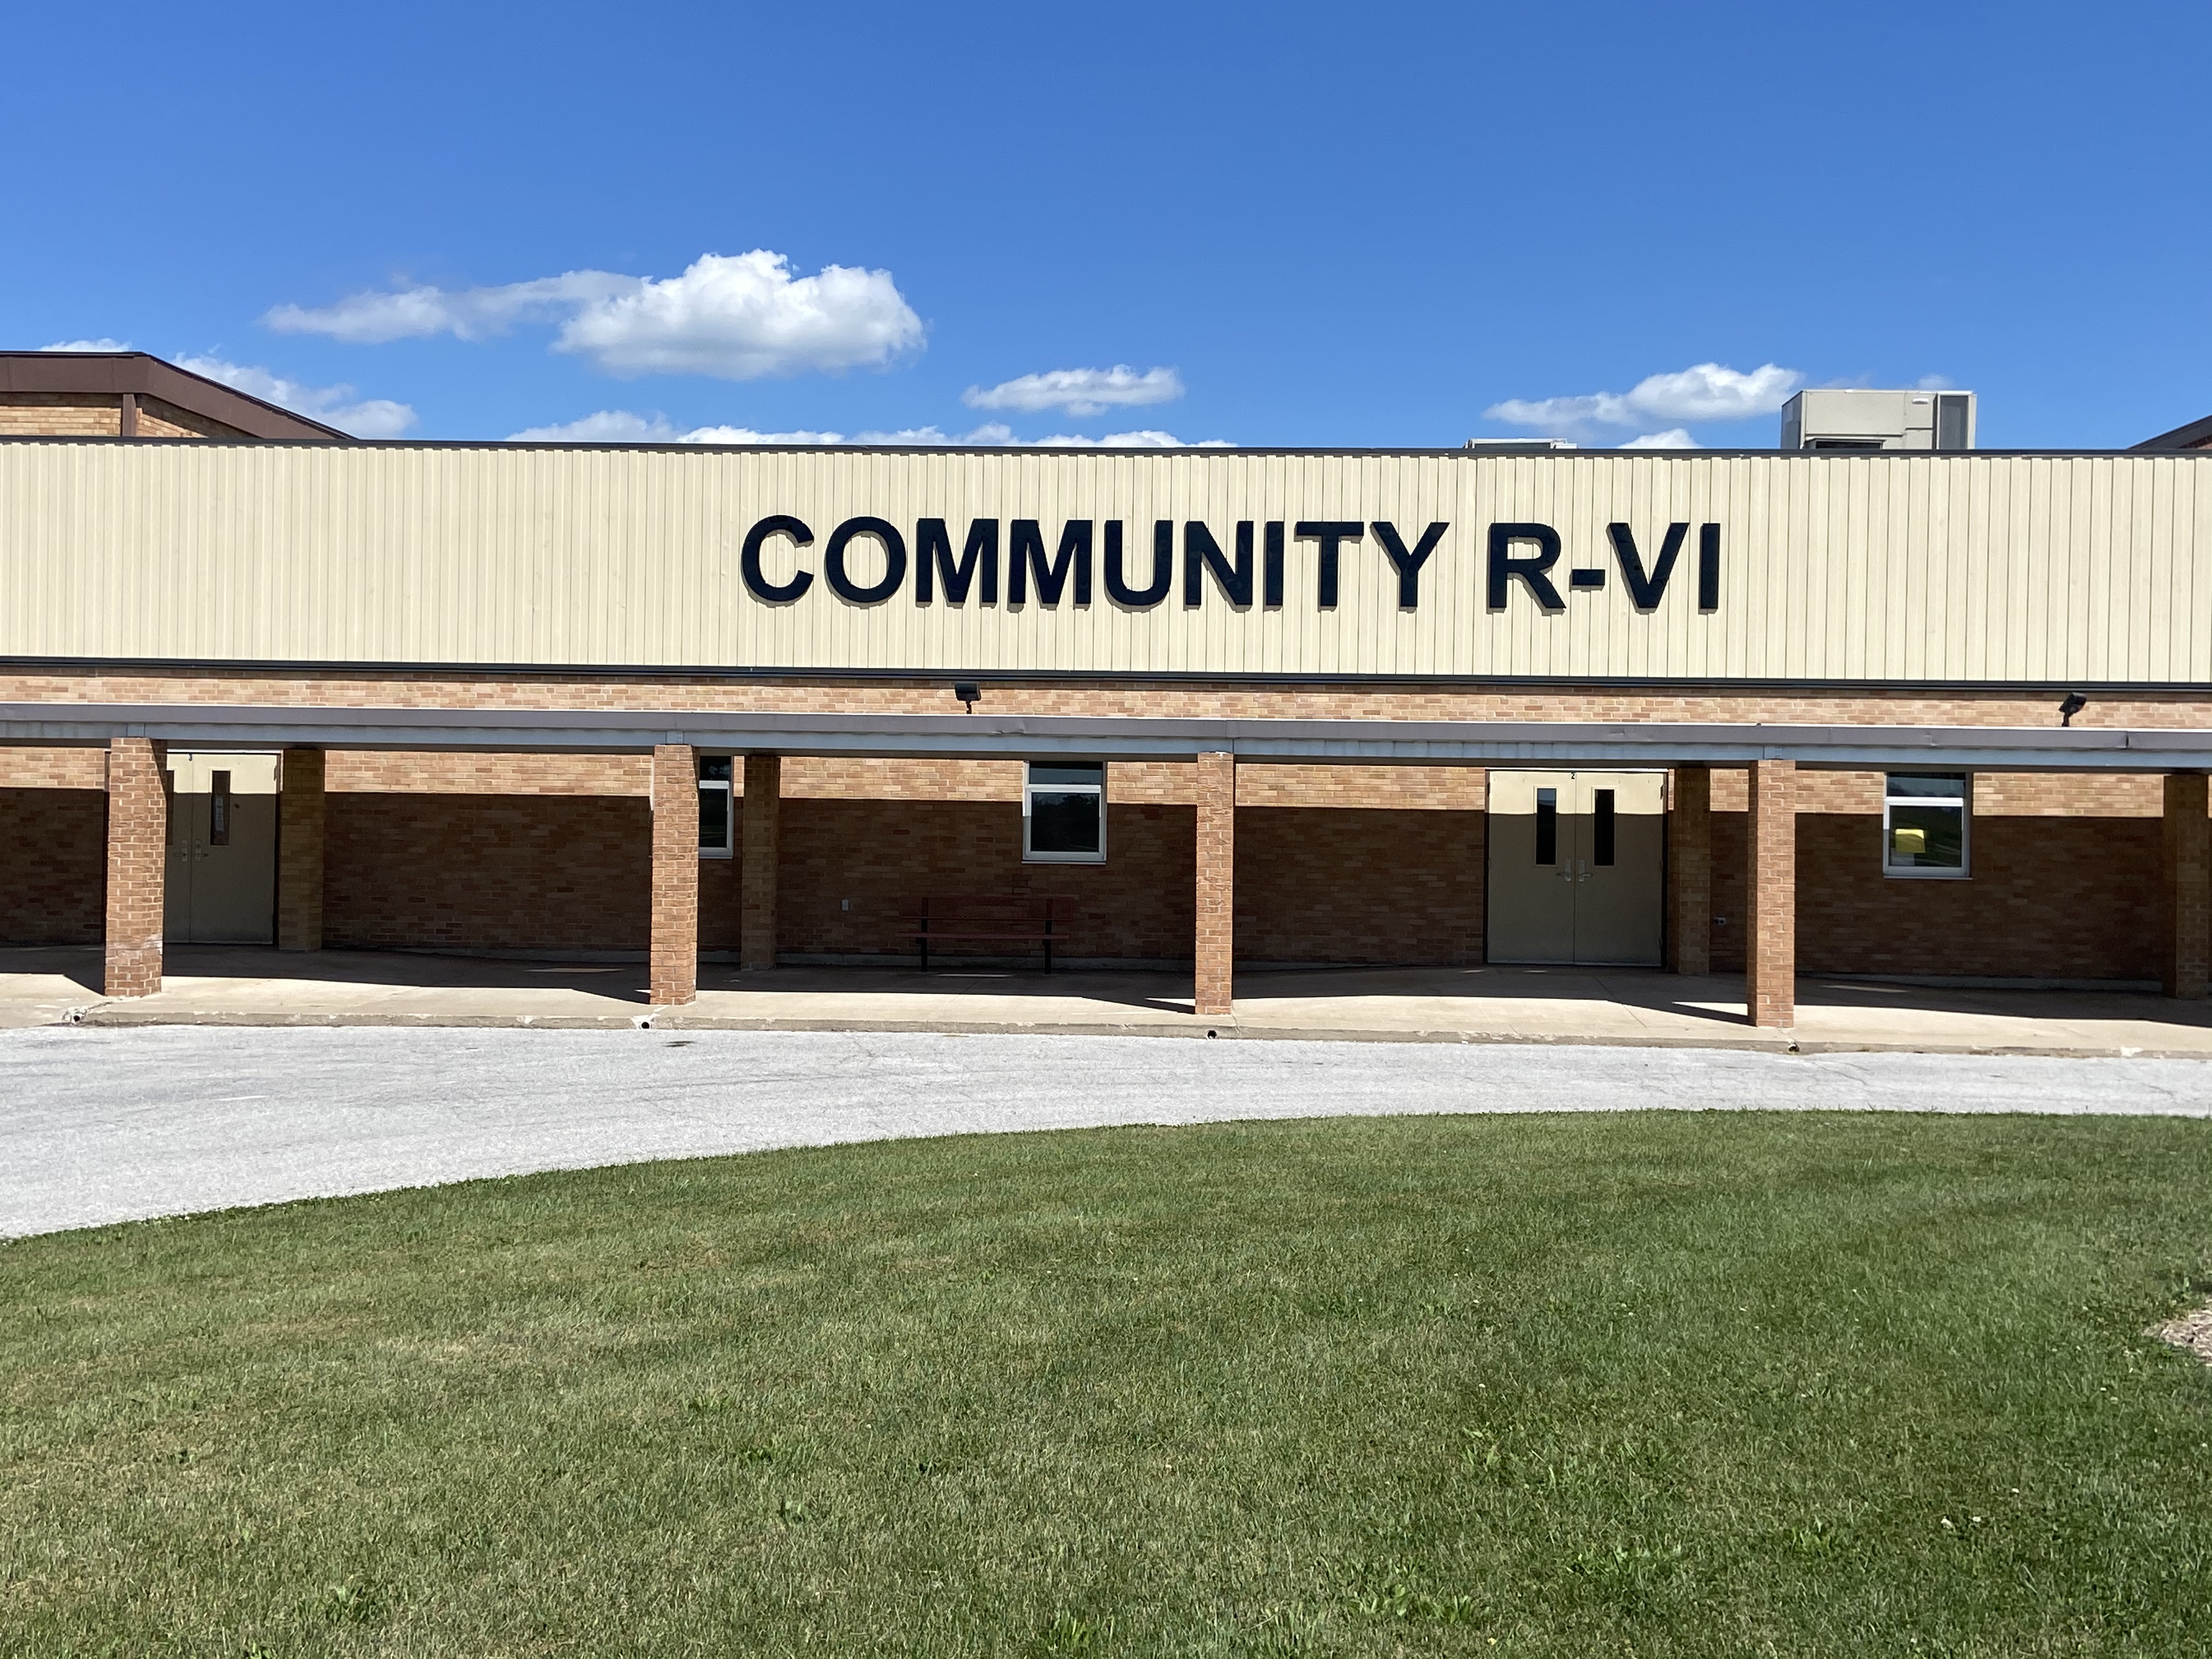 Community R Vi School District